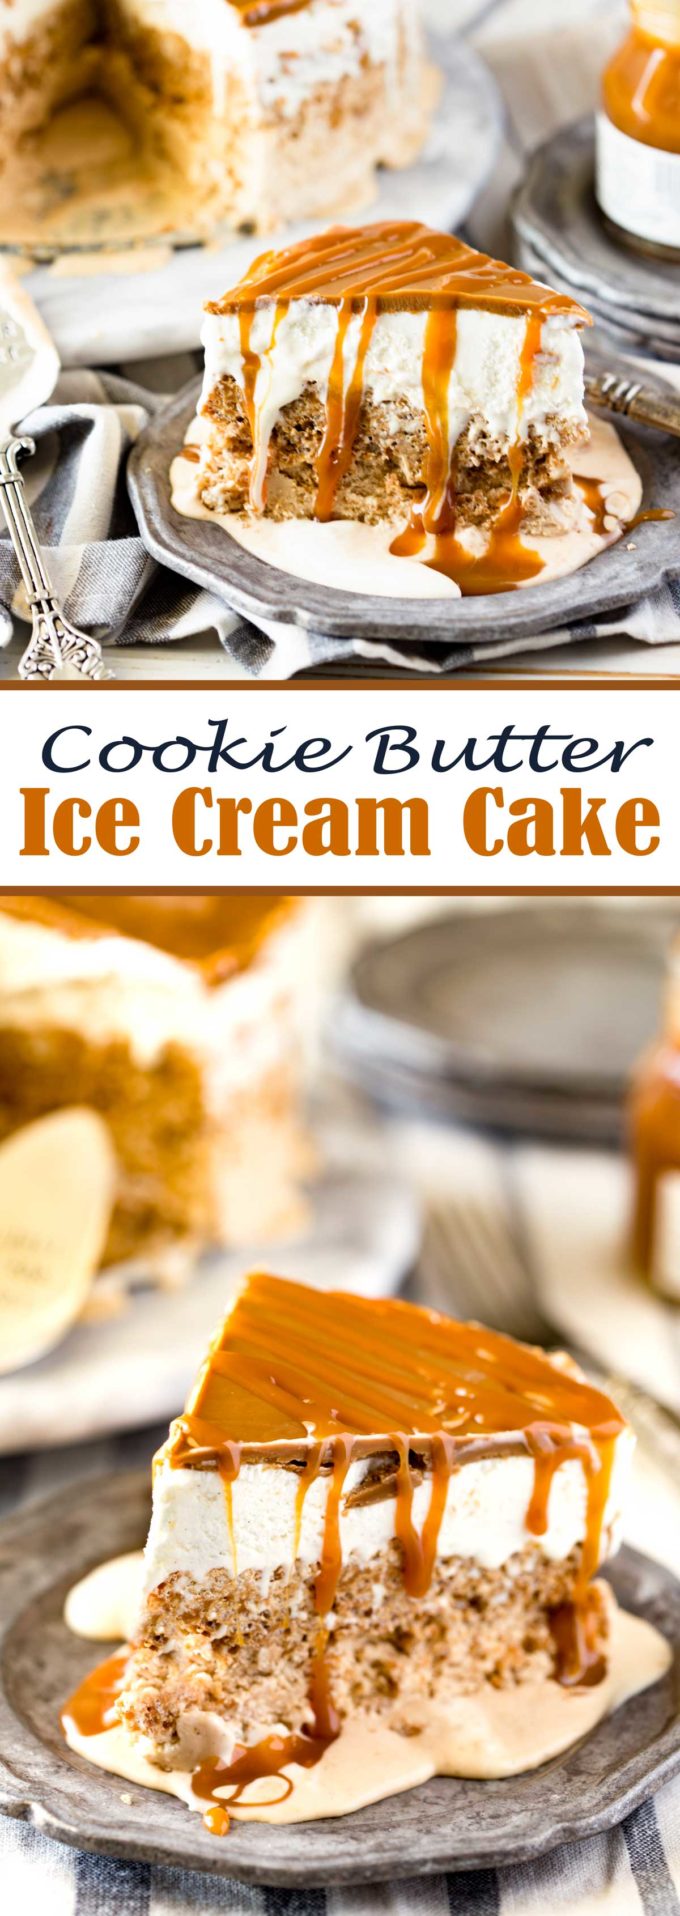 Cookie Butter Ice Cream Cake Recipe for Summer Dessert